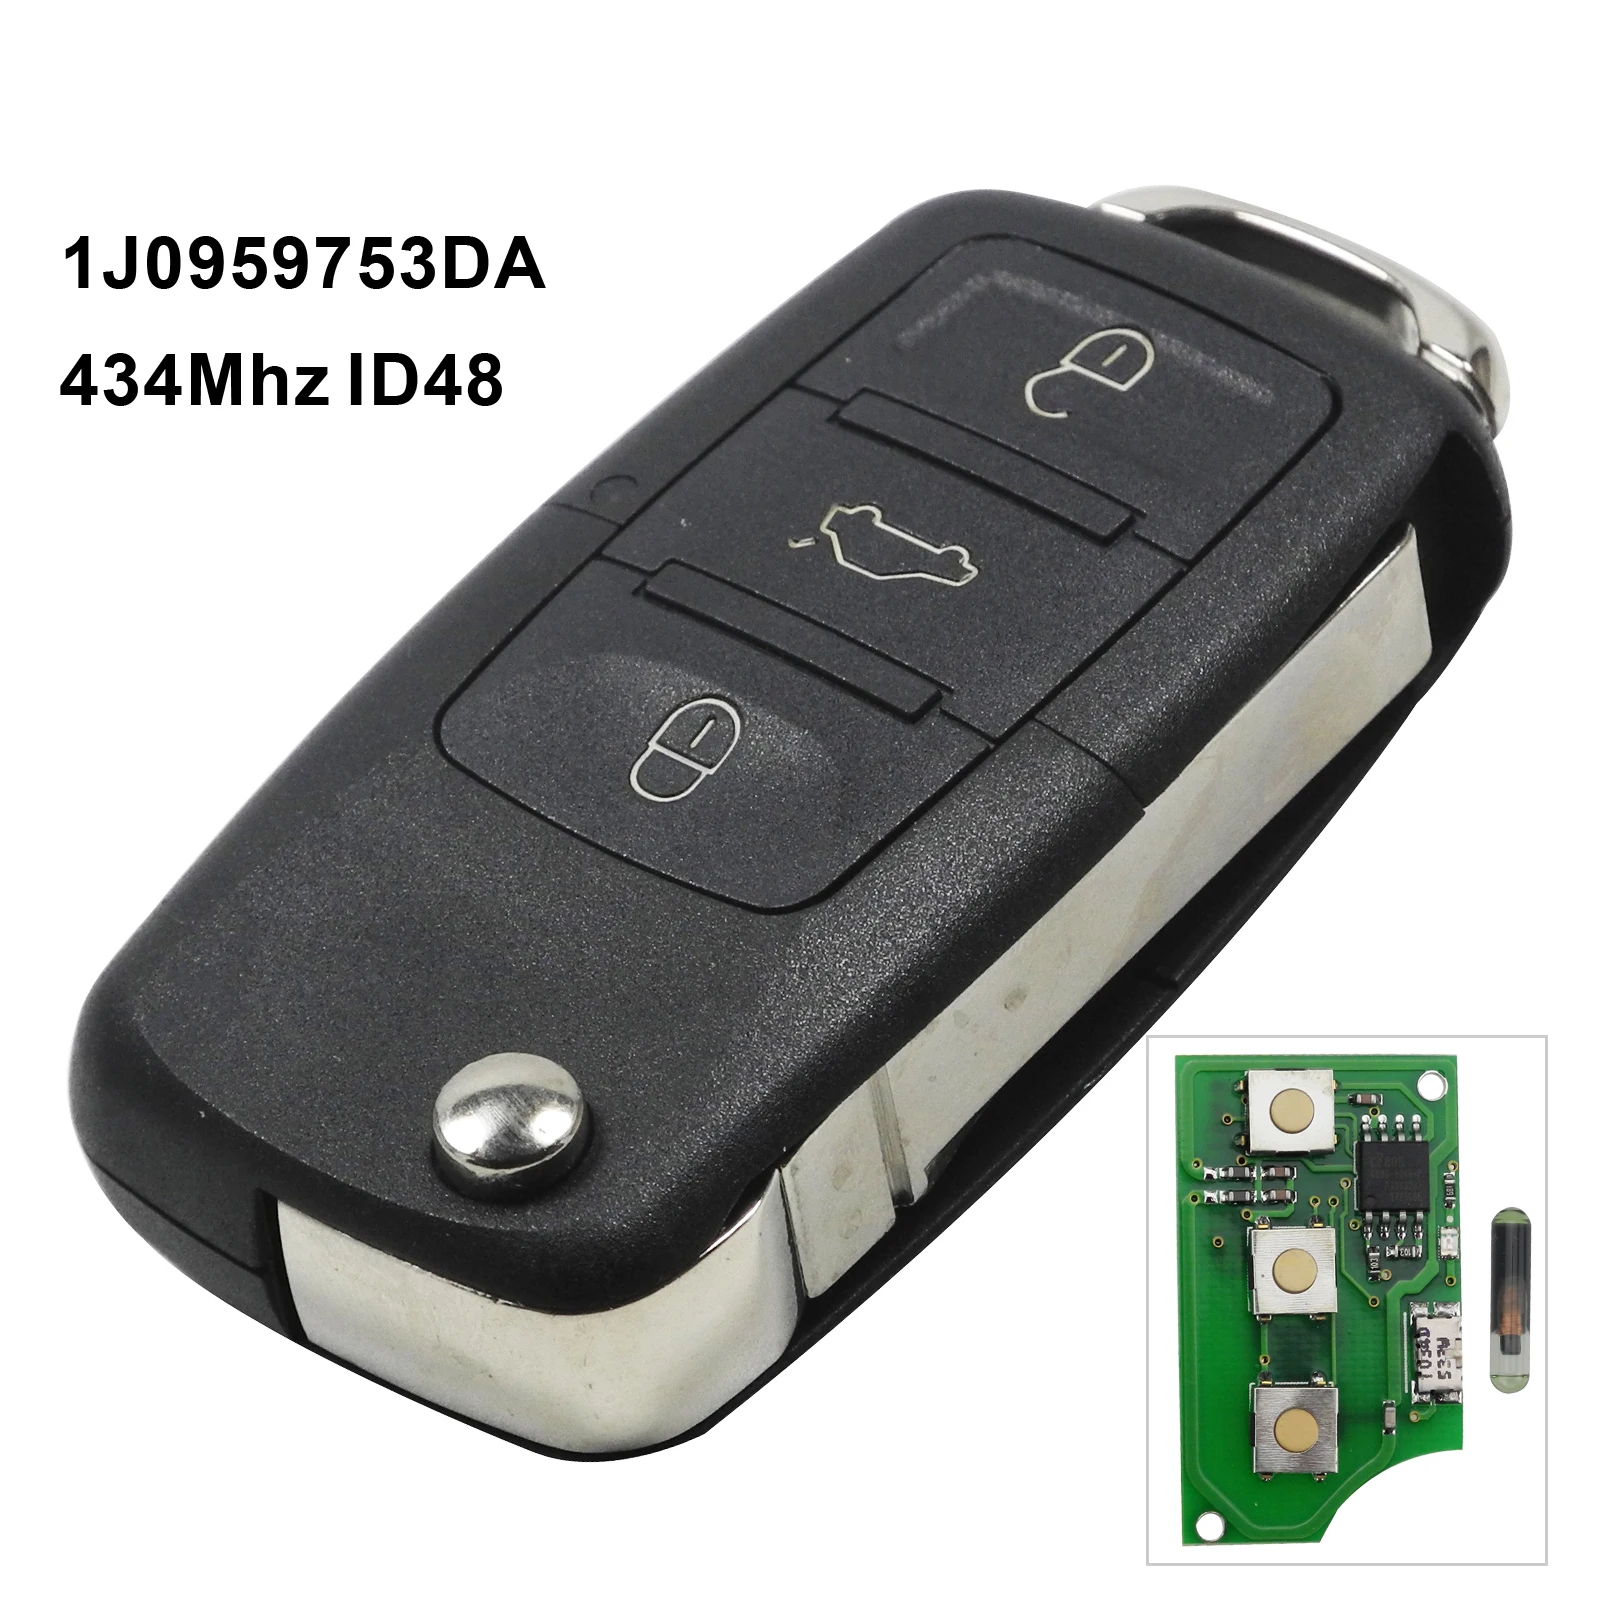 Jingyuqin 10X Автомобильный Дистанционный ключ ID48 для 1J0959753 DA/AH/G для Caddy EOS Jetta Sirocco Tiguantouran Passat Bora Polo Golf Beetle - Количество кнопок: 1J0959753DA